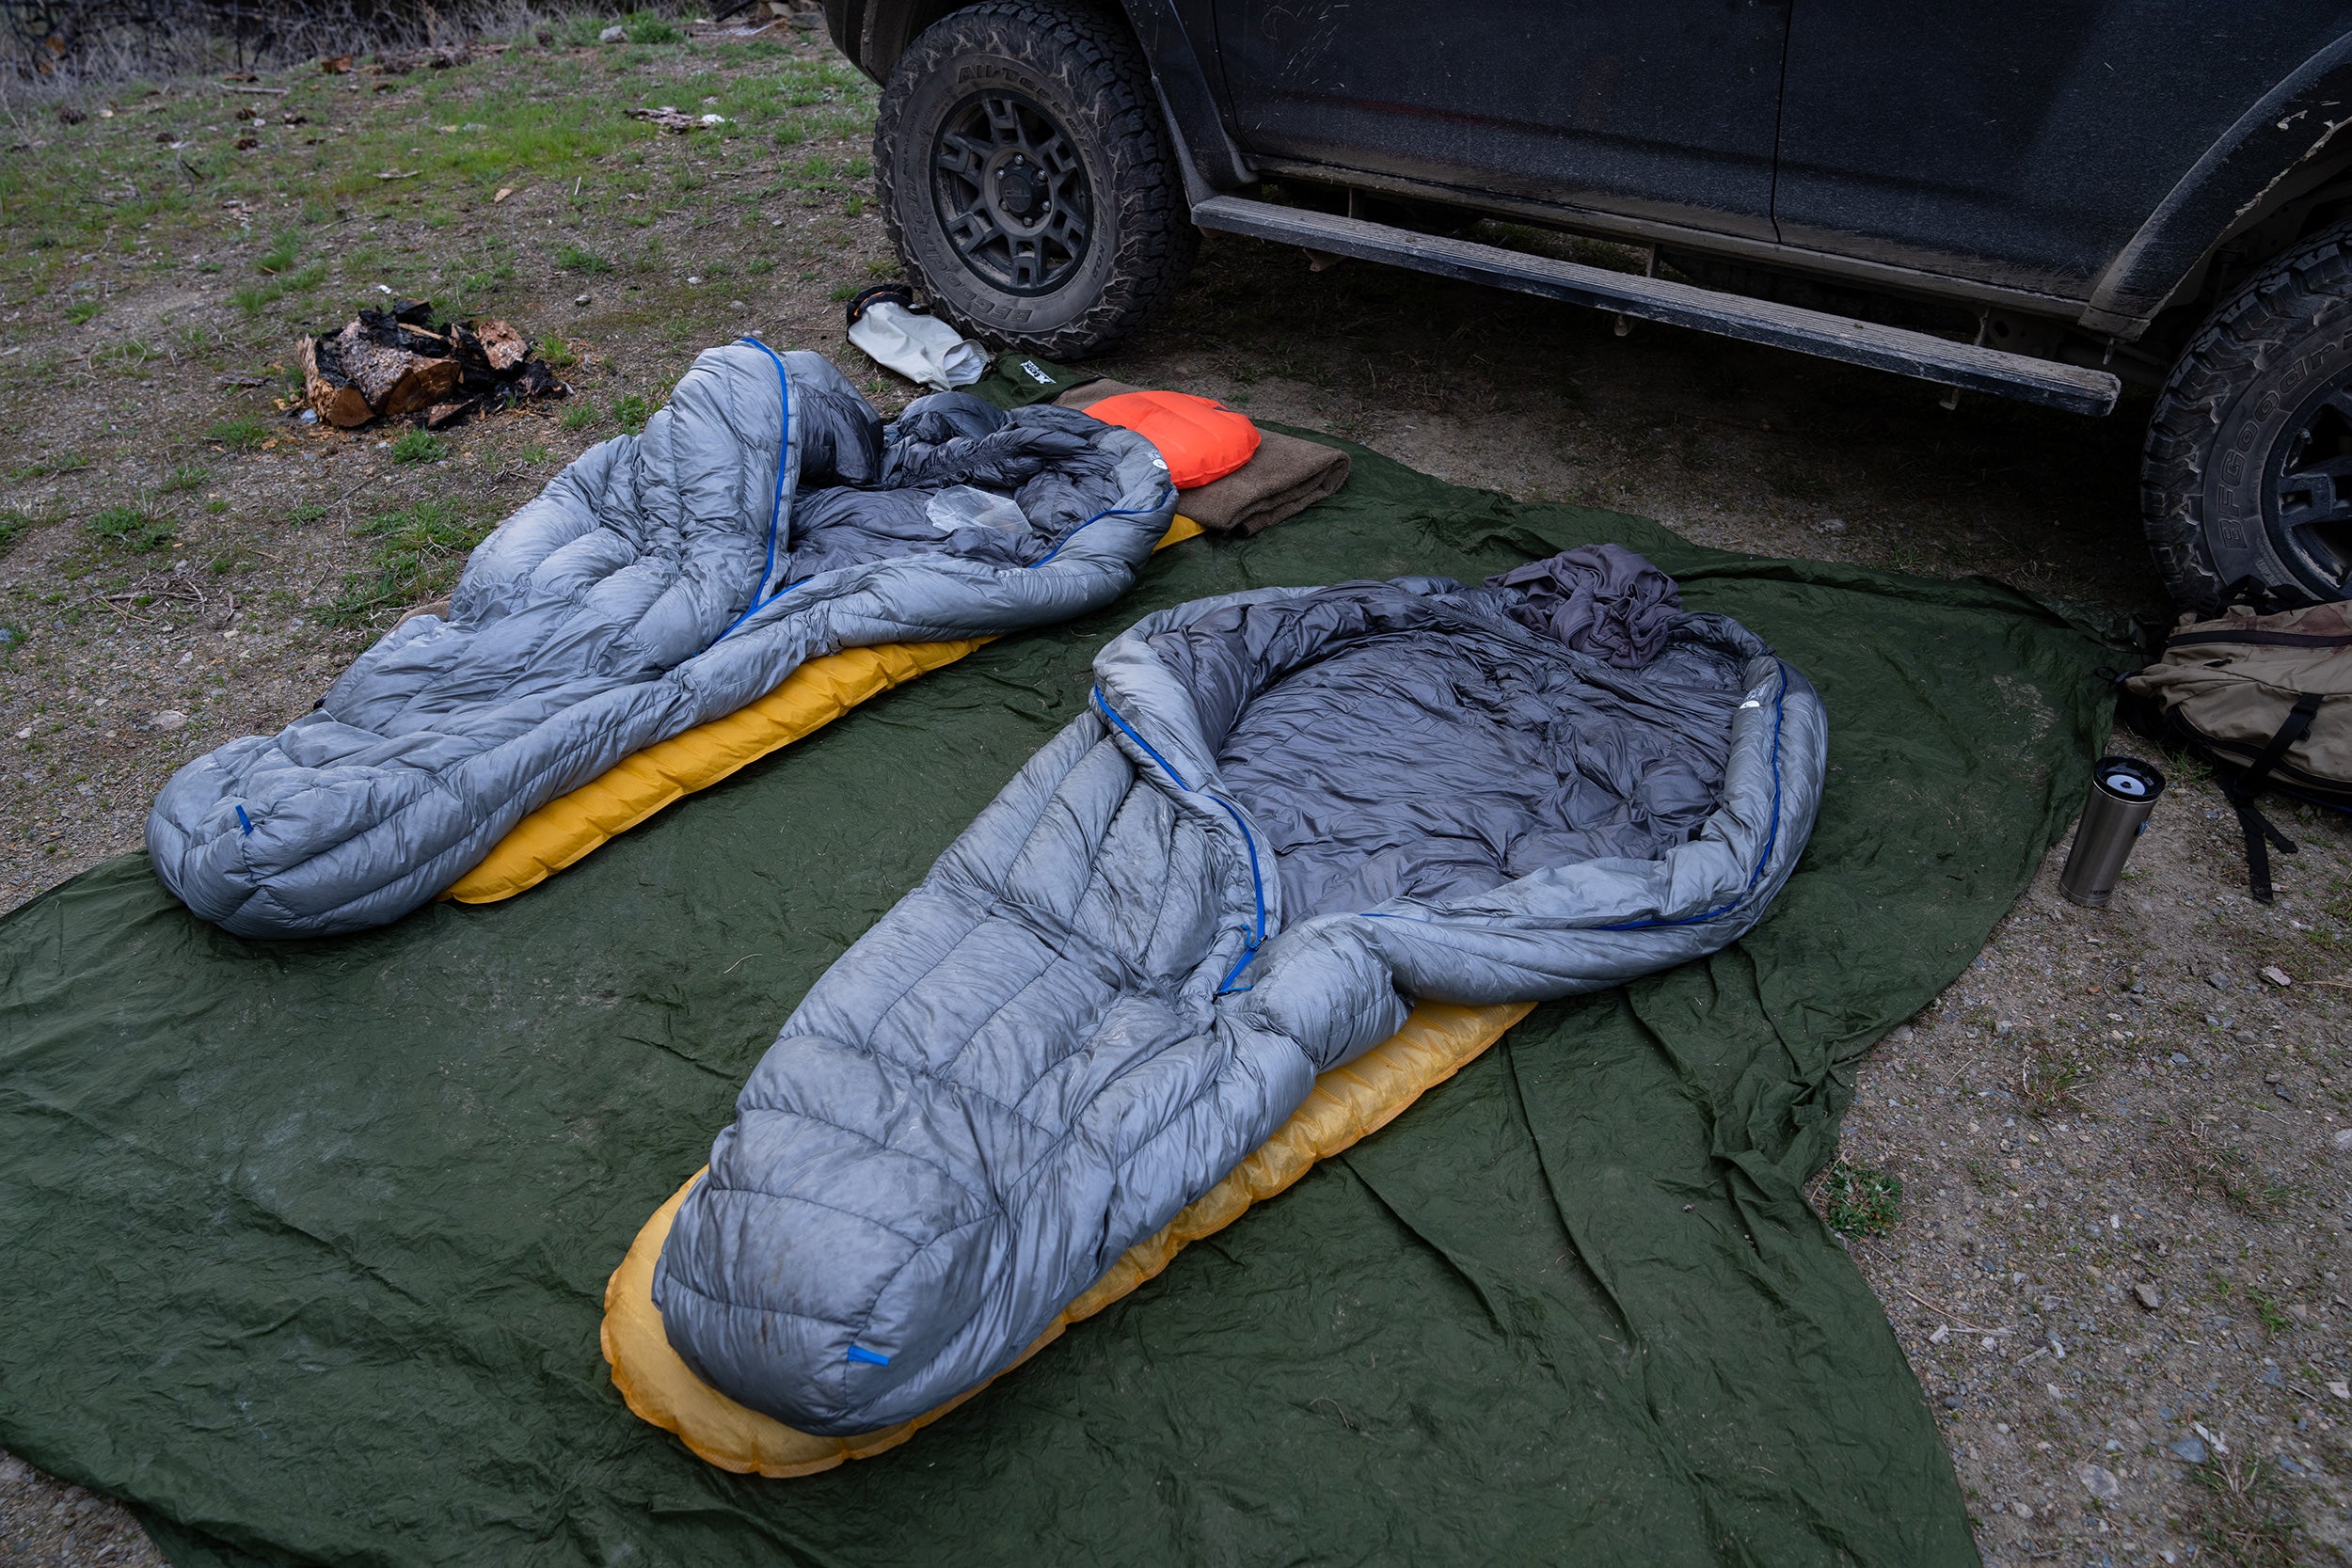 Technical sleeping bags